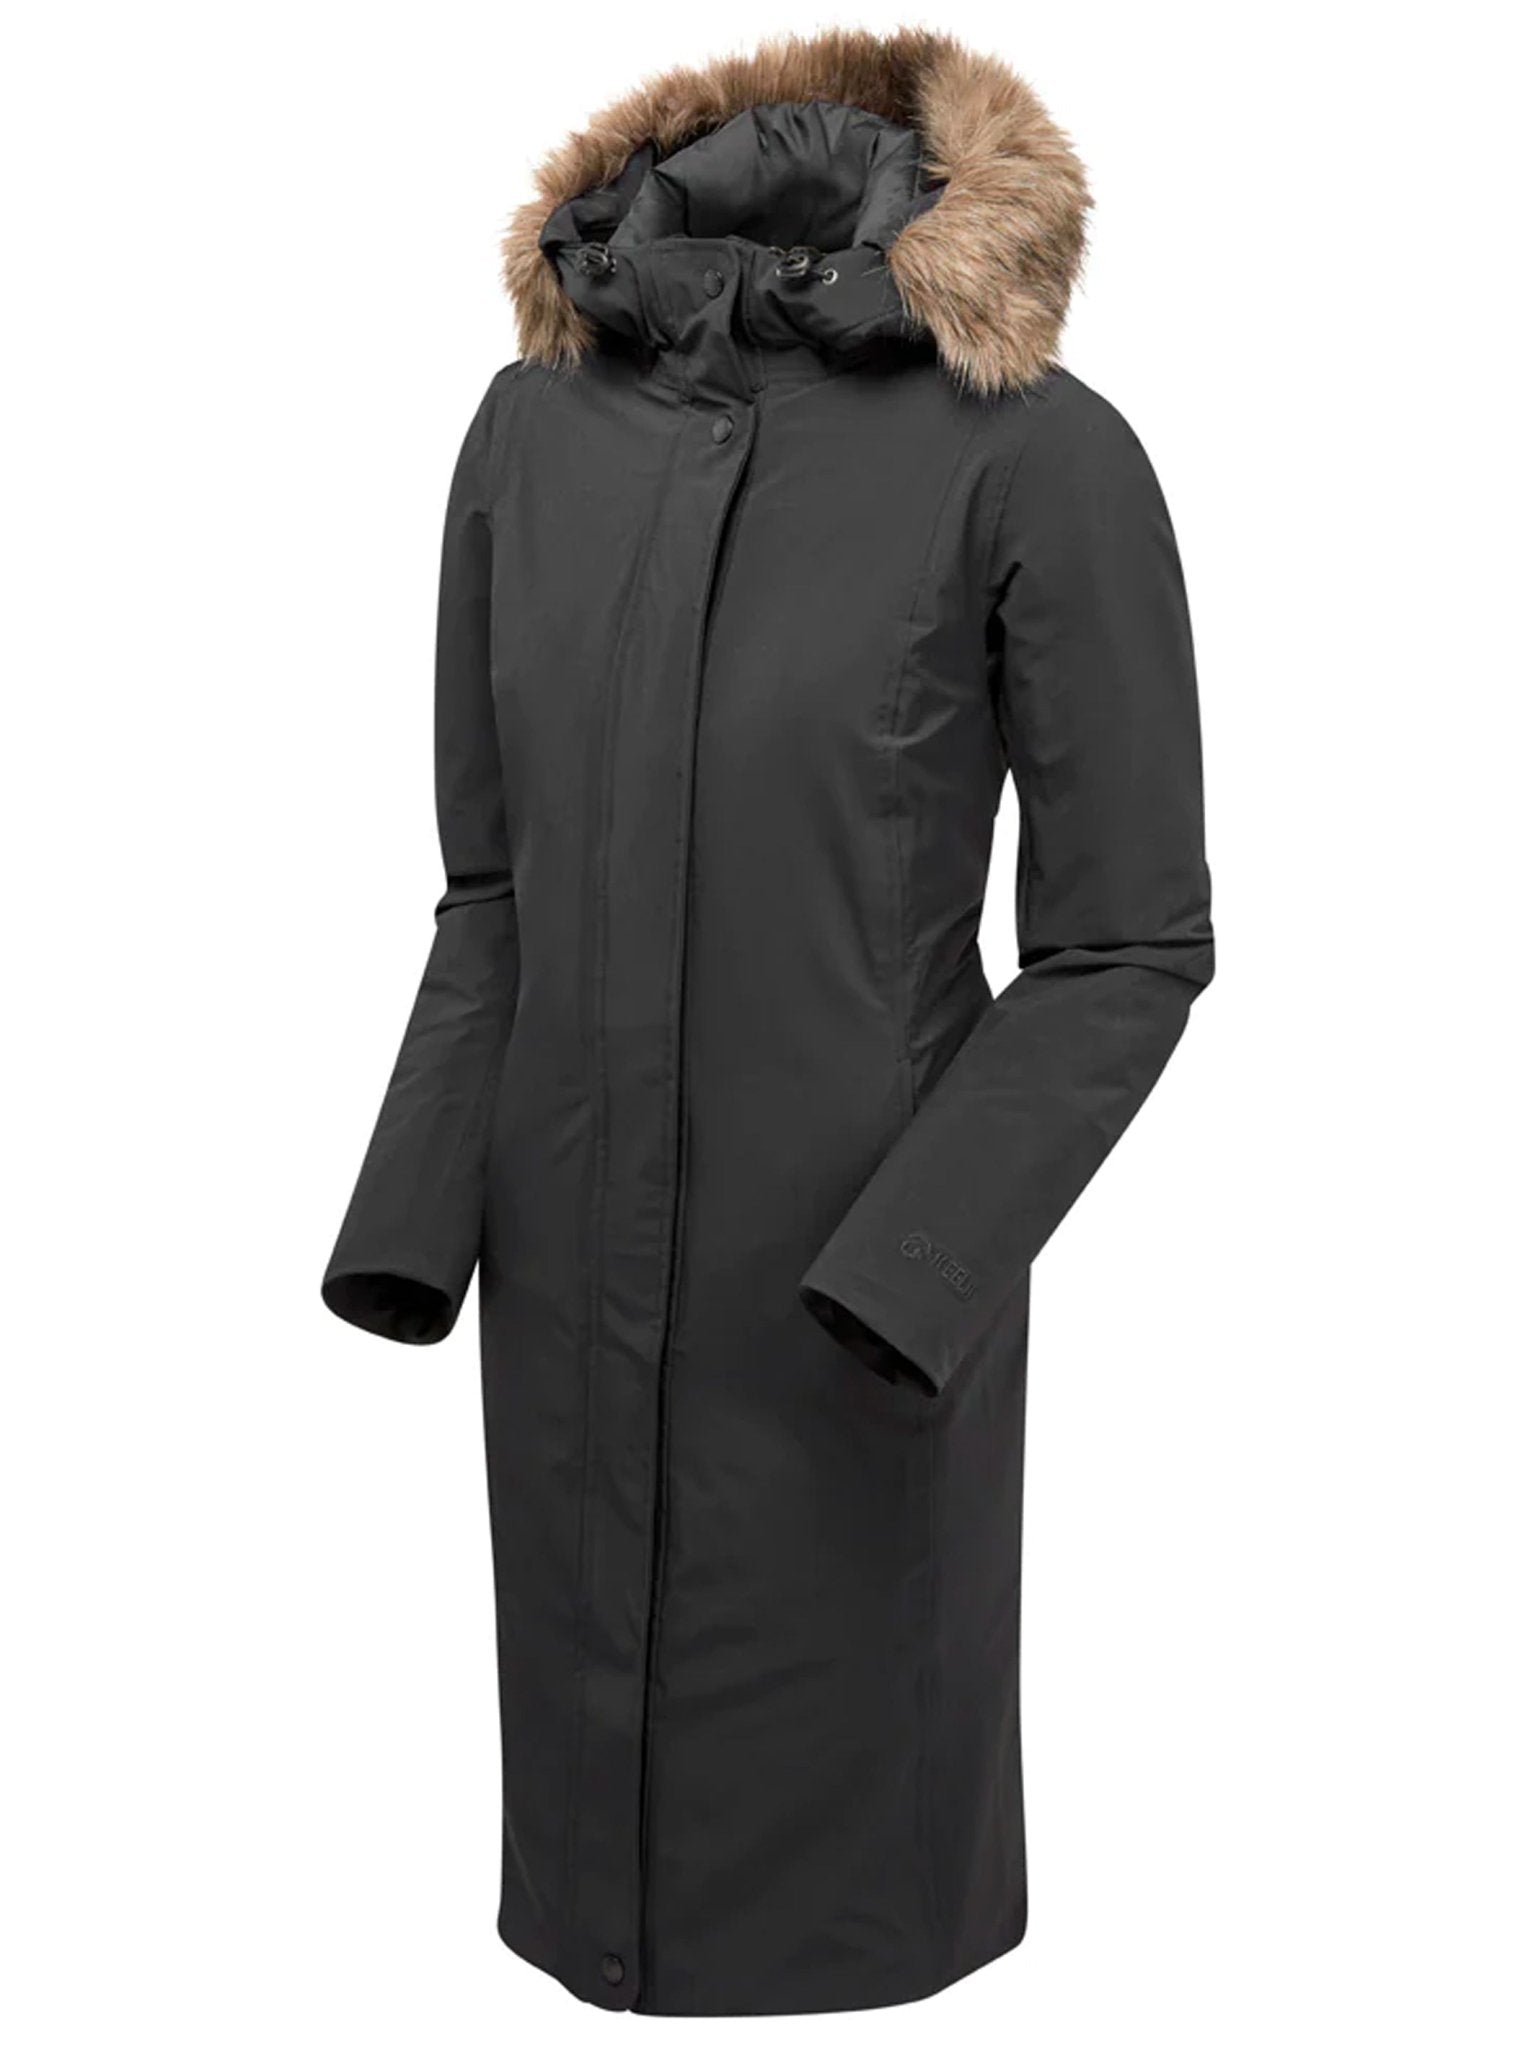 4elementsclothingKeelaKeela Outdoors - Keela Crofter Parka Long ladies coat 3/4 length waterproof windproof jacketOuterwear40350-100000-0-210